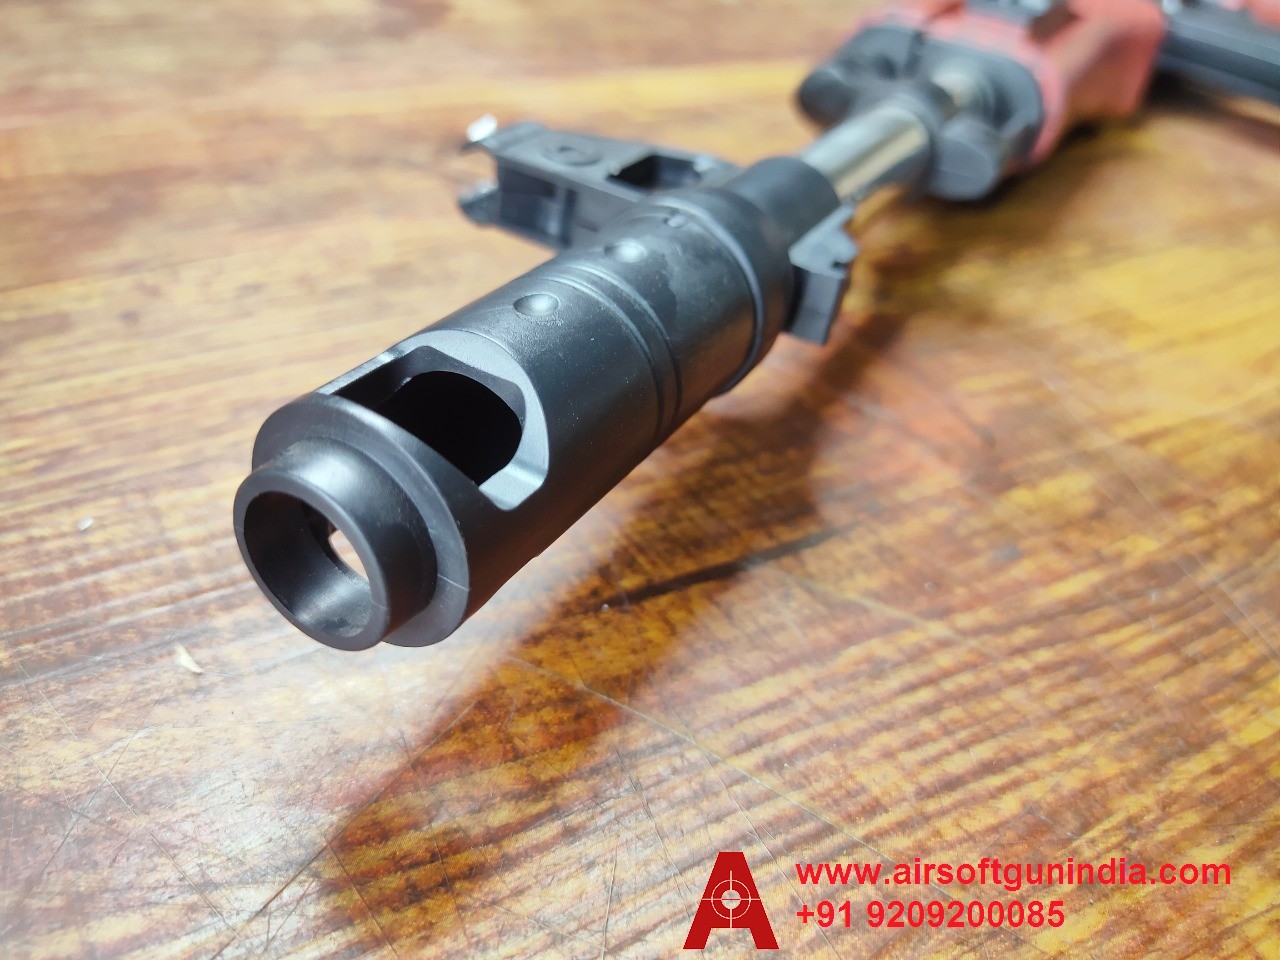 AK 47 Mod 777 Plastic Toy Rifle By Airsoft Gun India